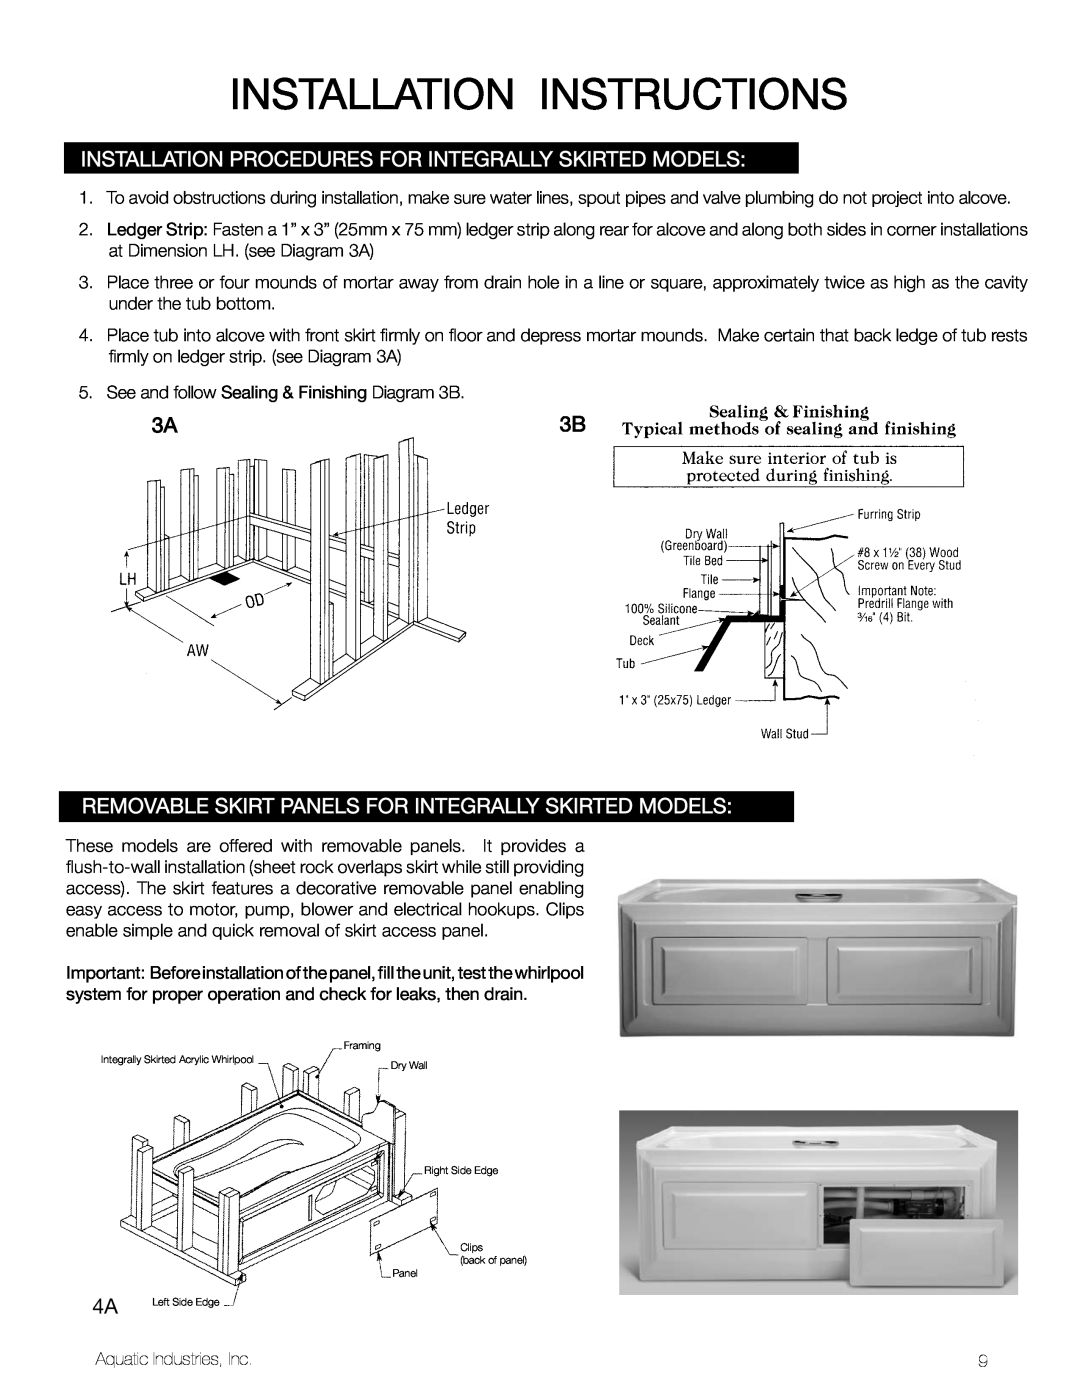 Aquatic LuxeAir Series owner manual Installationinstructions, RemovableSkirt Panels forIntegrallySkirted ModelS 